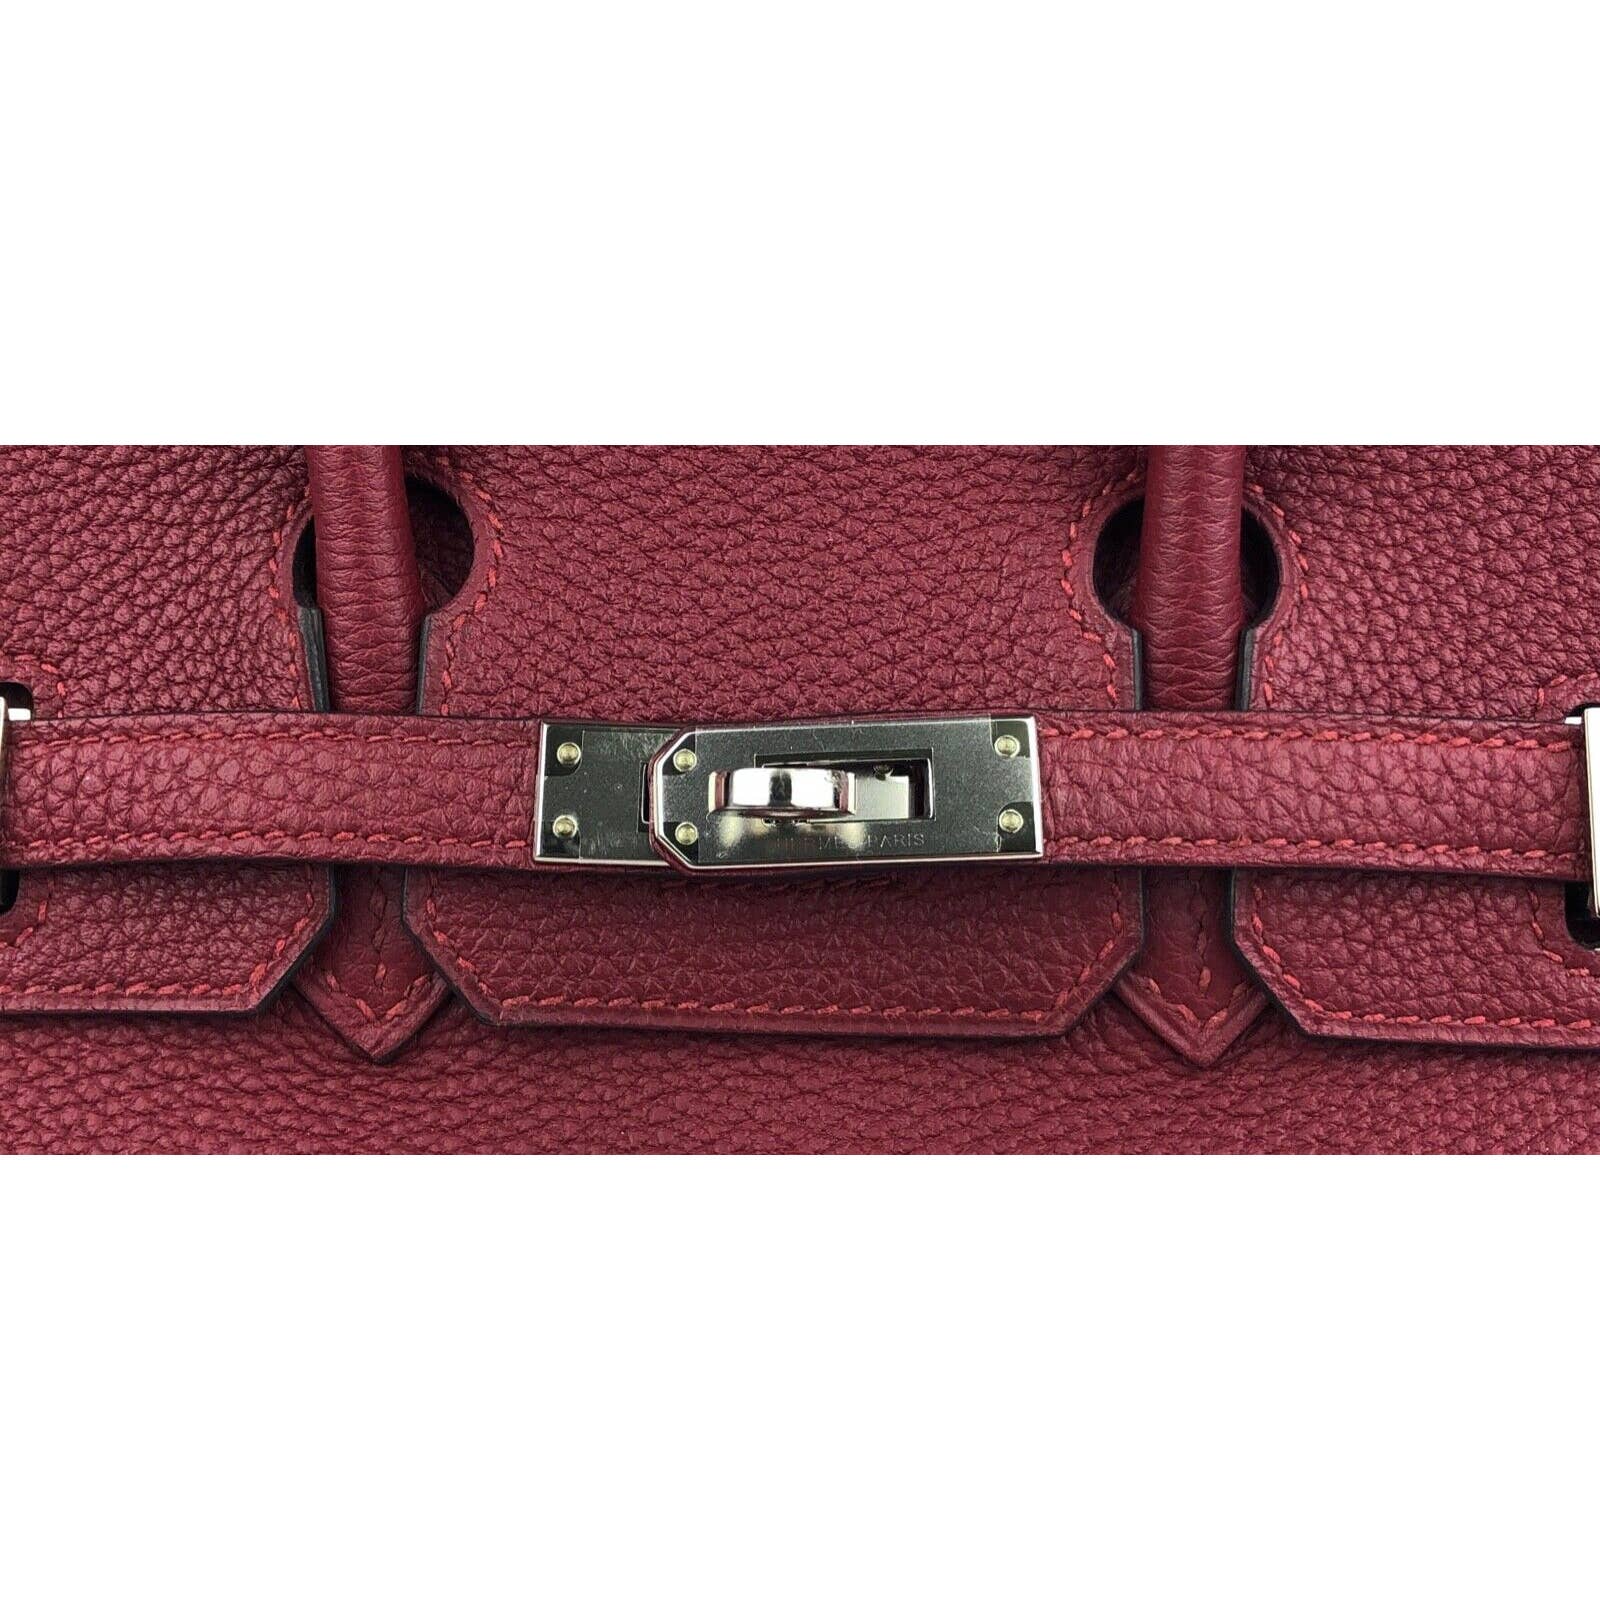 Hermes Birkin 25 Bag Exotic Jewel Red Rouge Grenat Togo Palladium